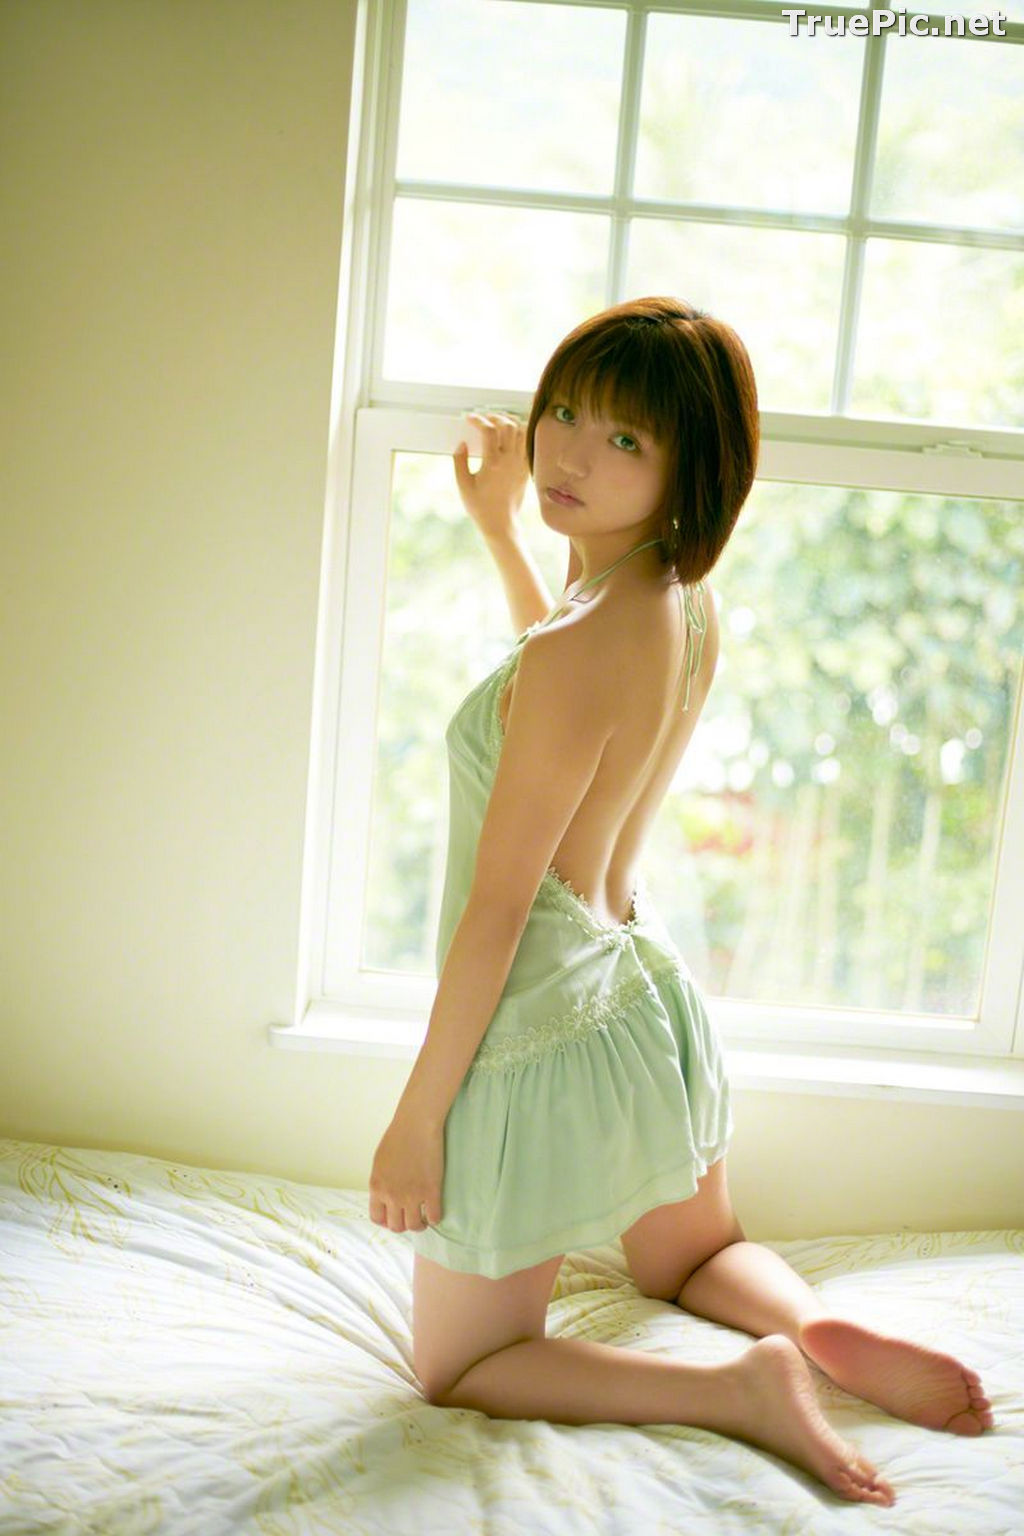 Image Wanibooks No.135 – Japanese Idol Singer and Actress – Erina Mano - TruePic.net - Picture-11